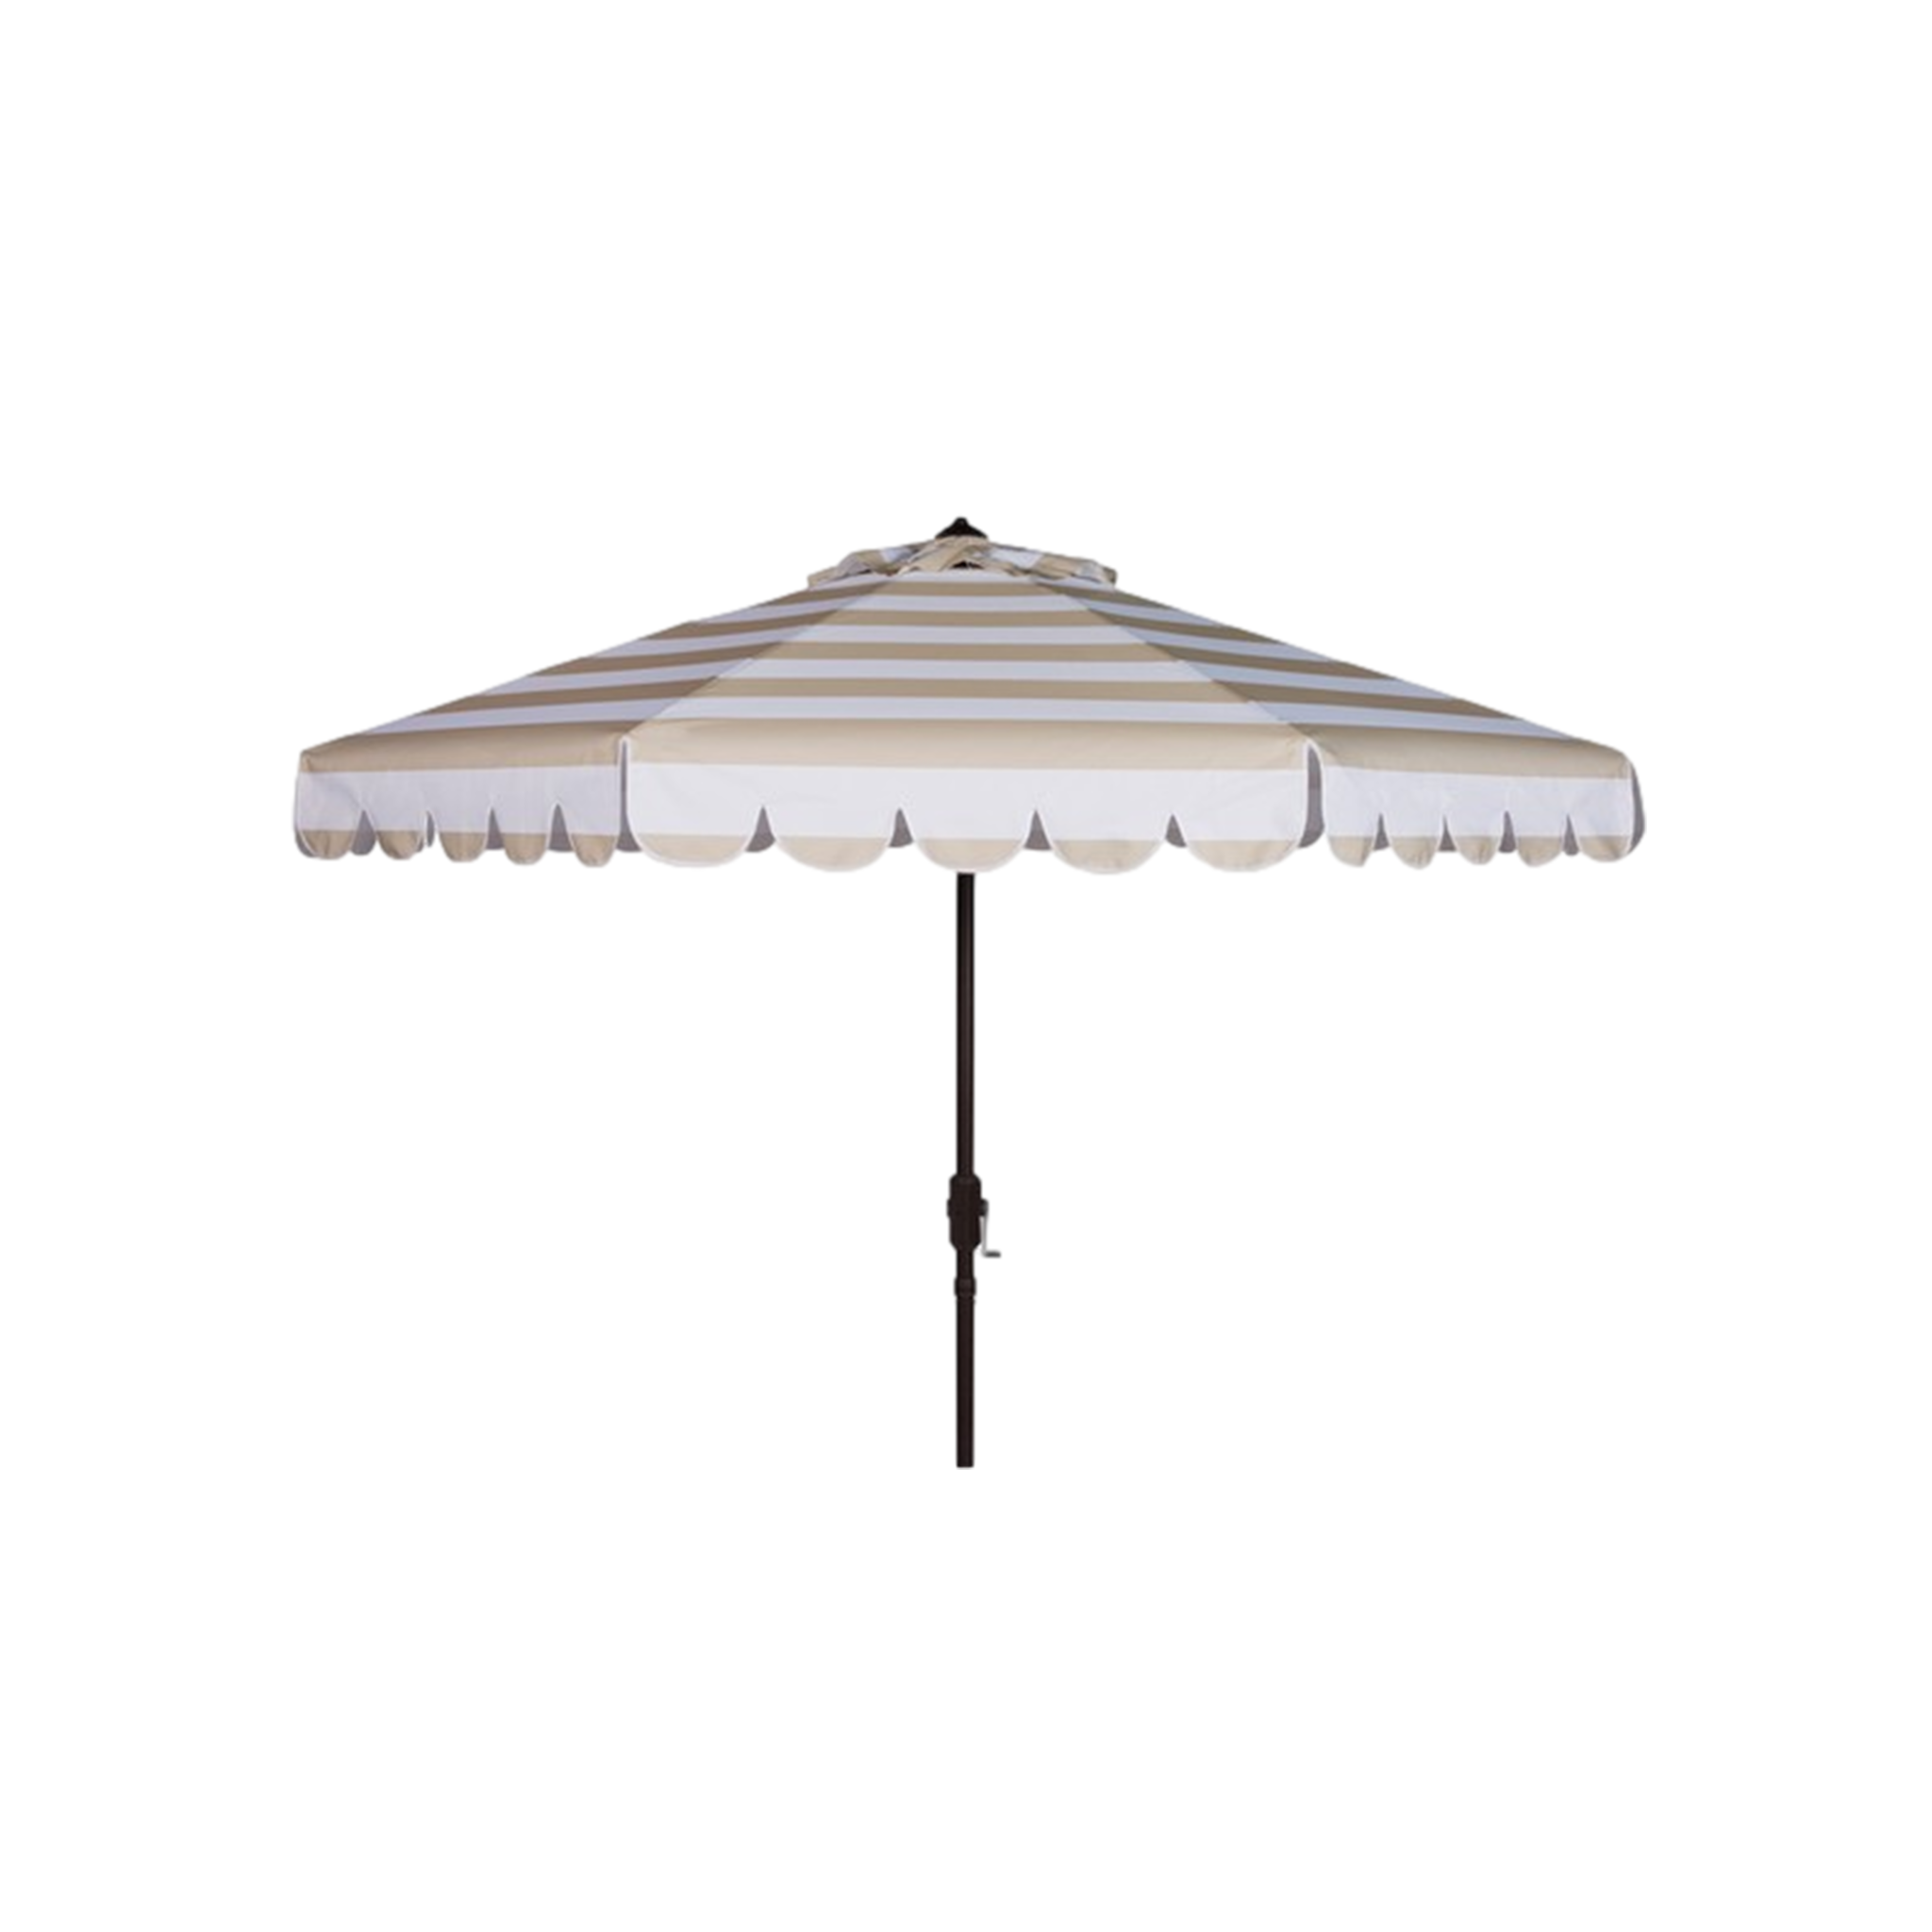 Vienna Umbrella (11&#39;)